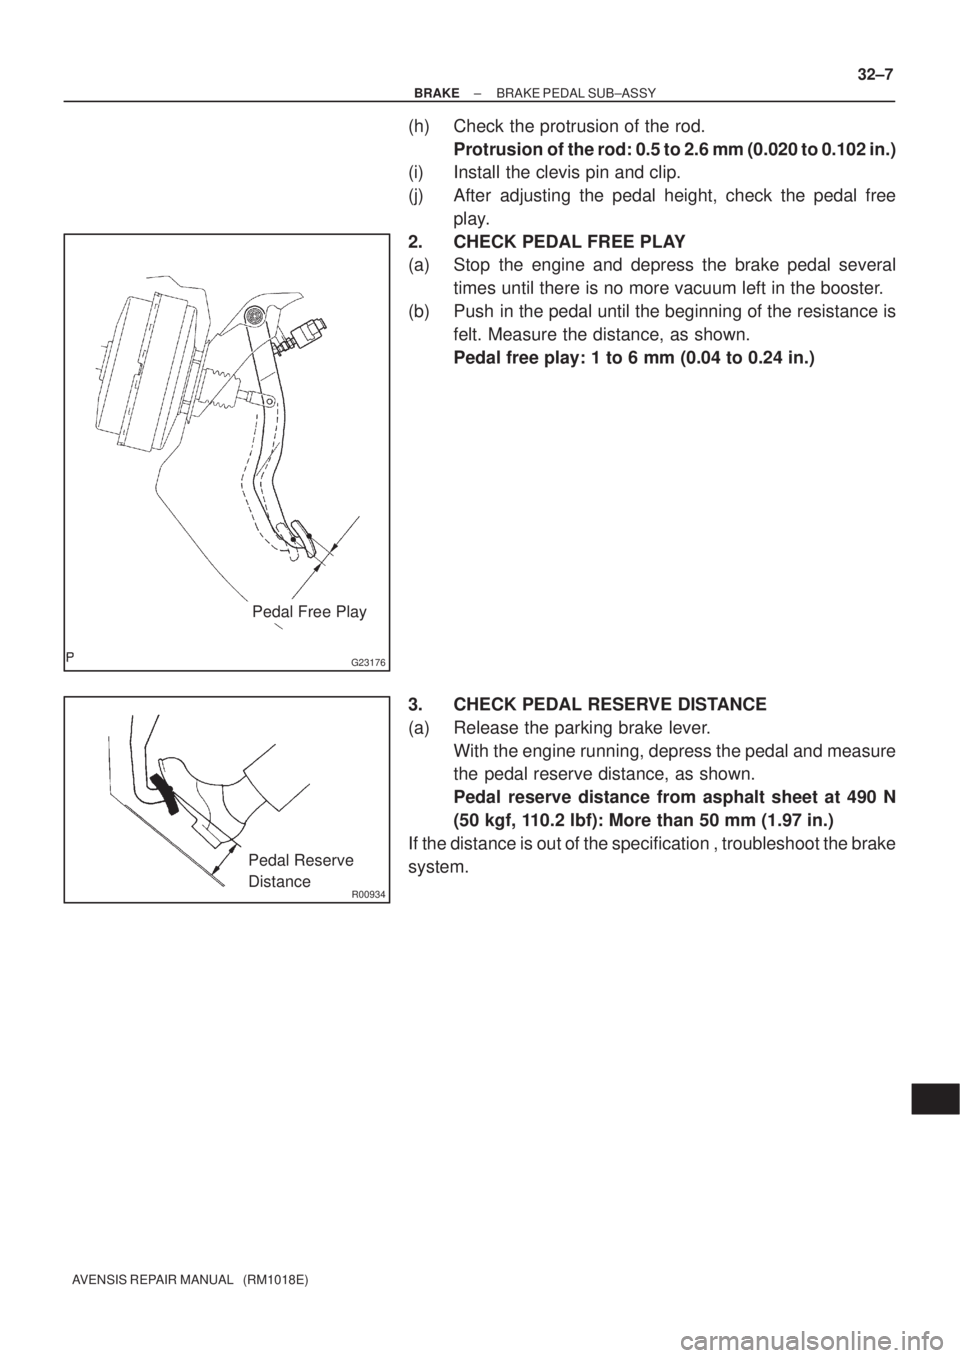 TOYOTA AVENSIS 2002  Repair Manual G23176
Pedal Free Play
R00934
Pedal Reserve
Distance
± BRAKEBRAKE PEDAL SUB±ASSY
32±7
AVENSIS REPAIR MANUAL   (RM1018E)
(h) Check the protrusion of the rod.
Protrusion of the rod: 0.5 to 2.6 mm (0.